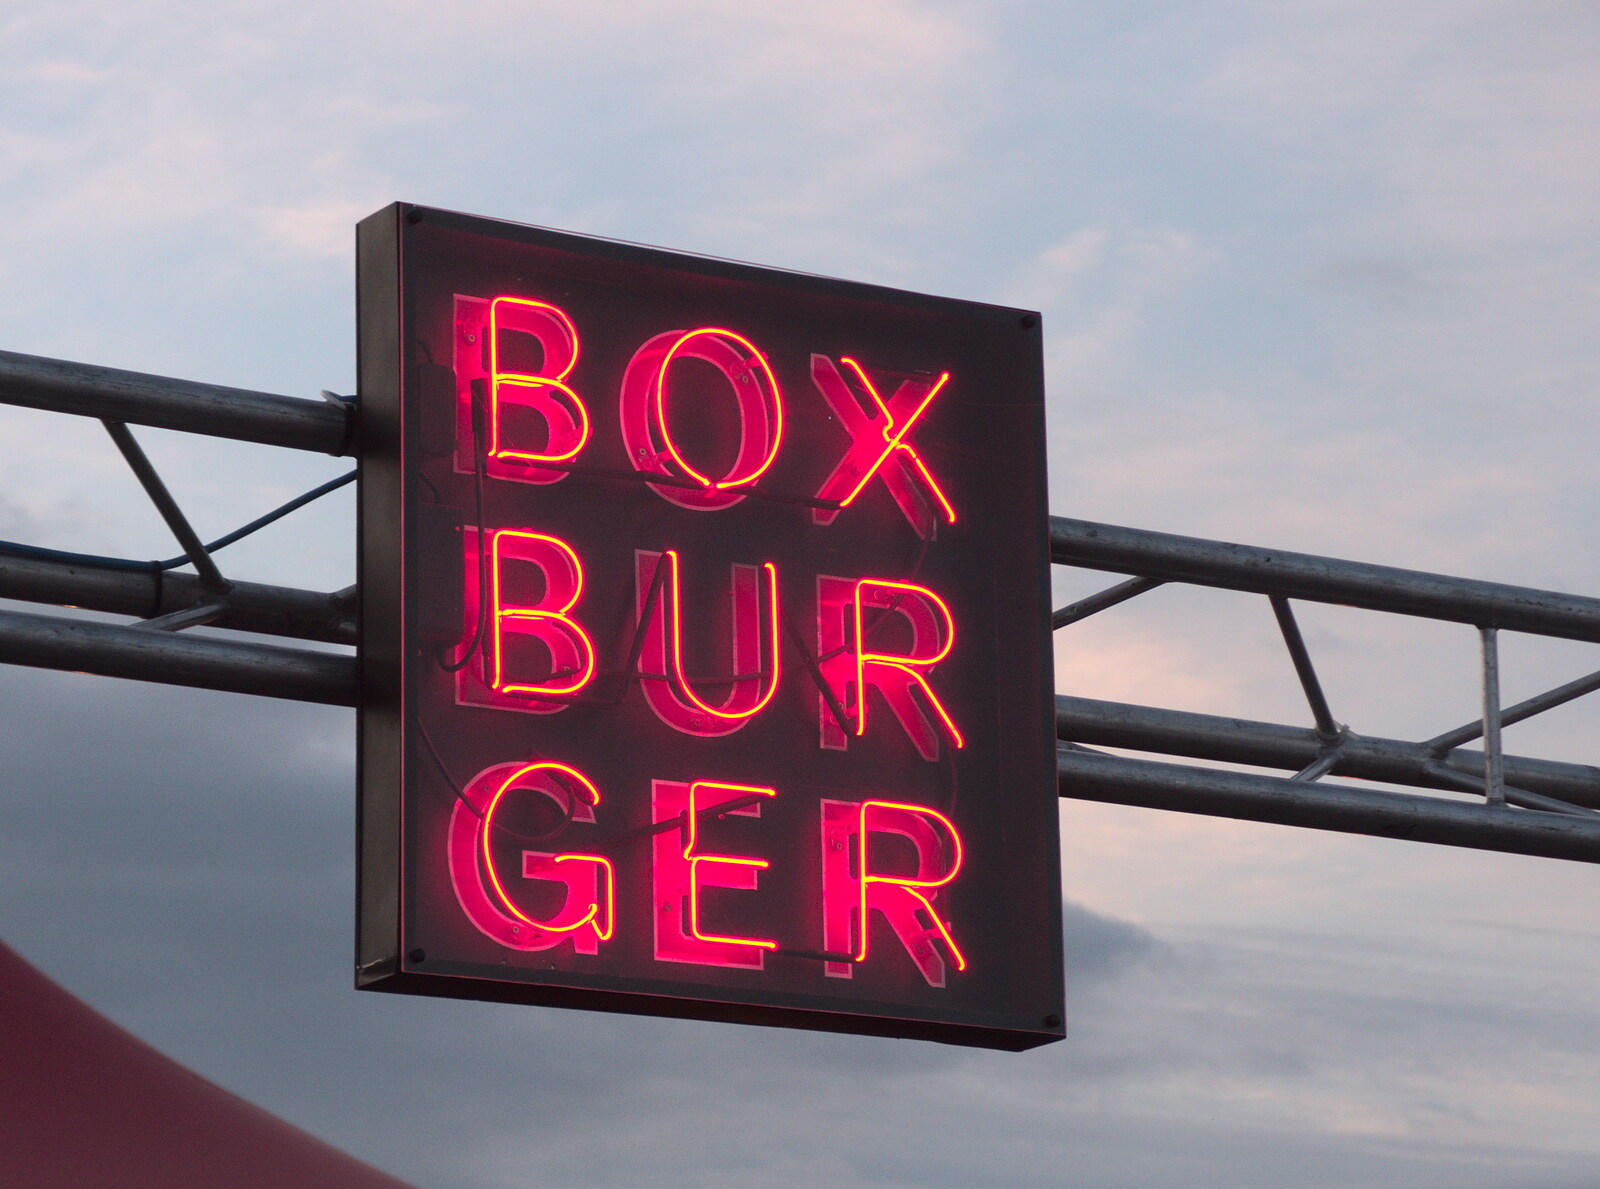 Box Burger's neon sign from Beatyard Festival, Dún Laoghaire, County Dublin, Ireland - 5th August 2018